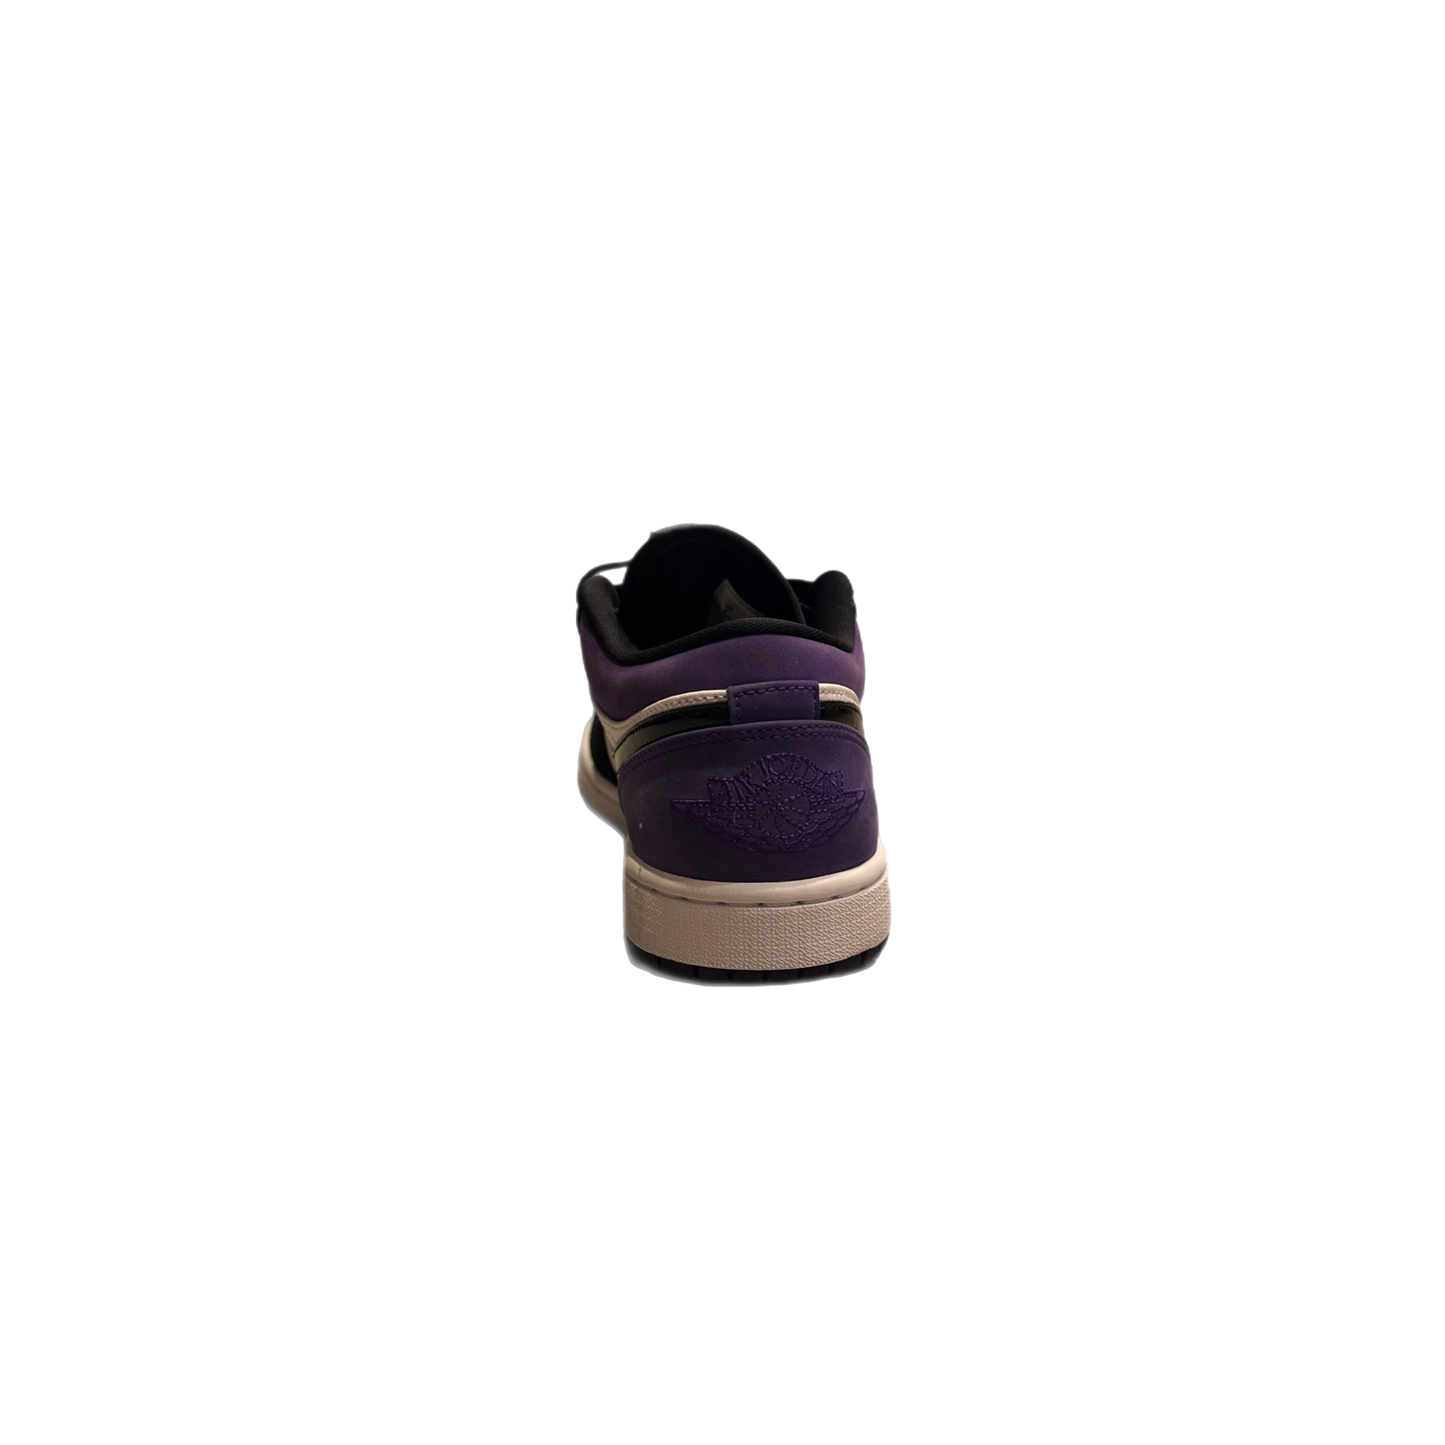 Jordan - "1 Low Court Purple" - Size 8